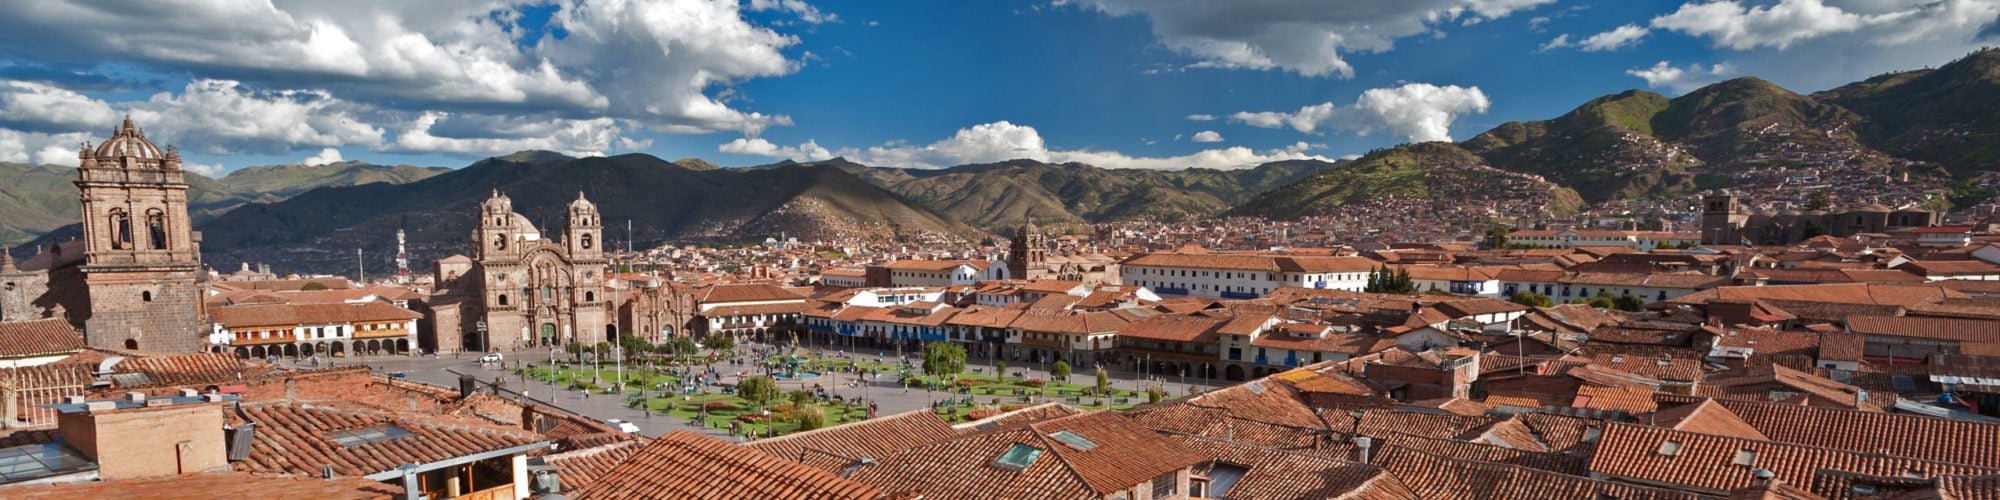 Peru travel agents packages deals